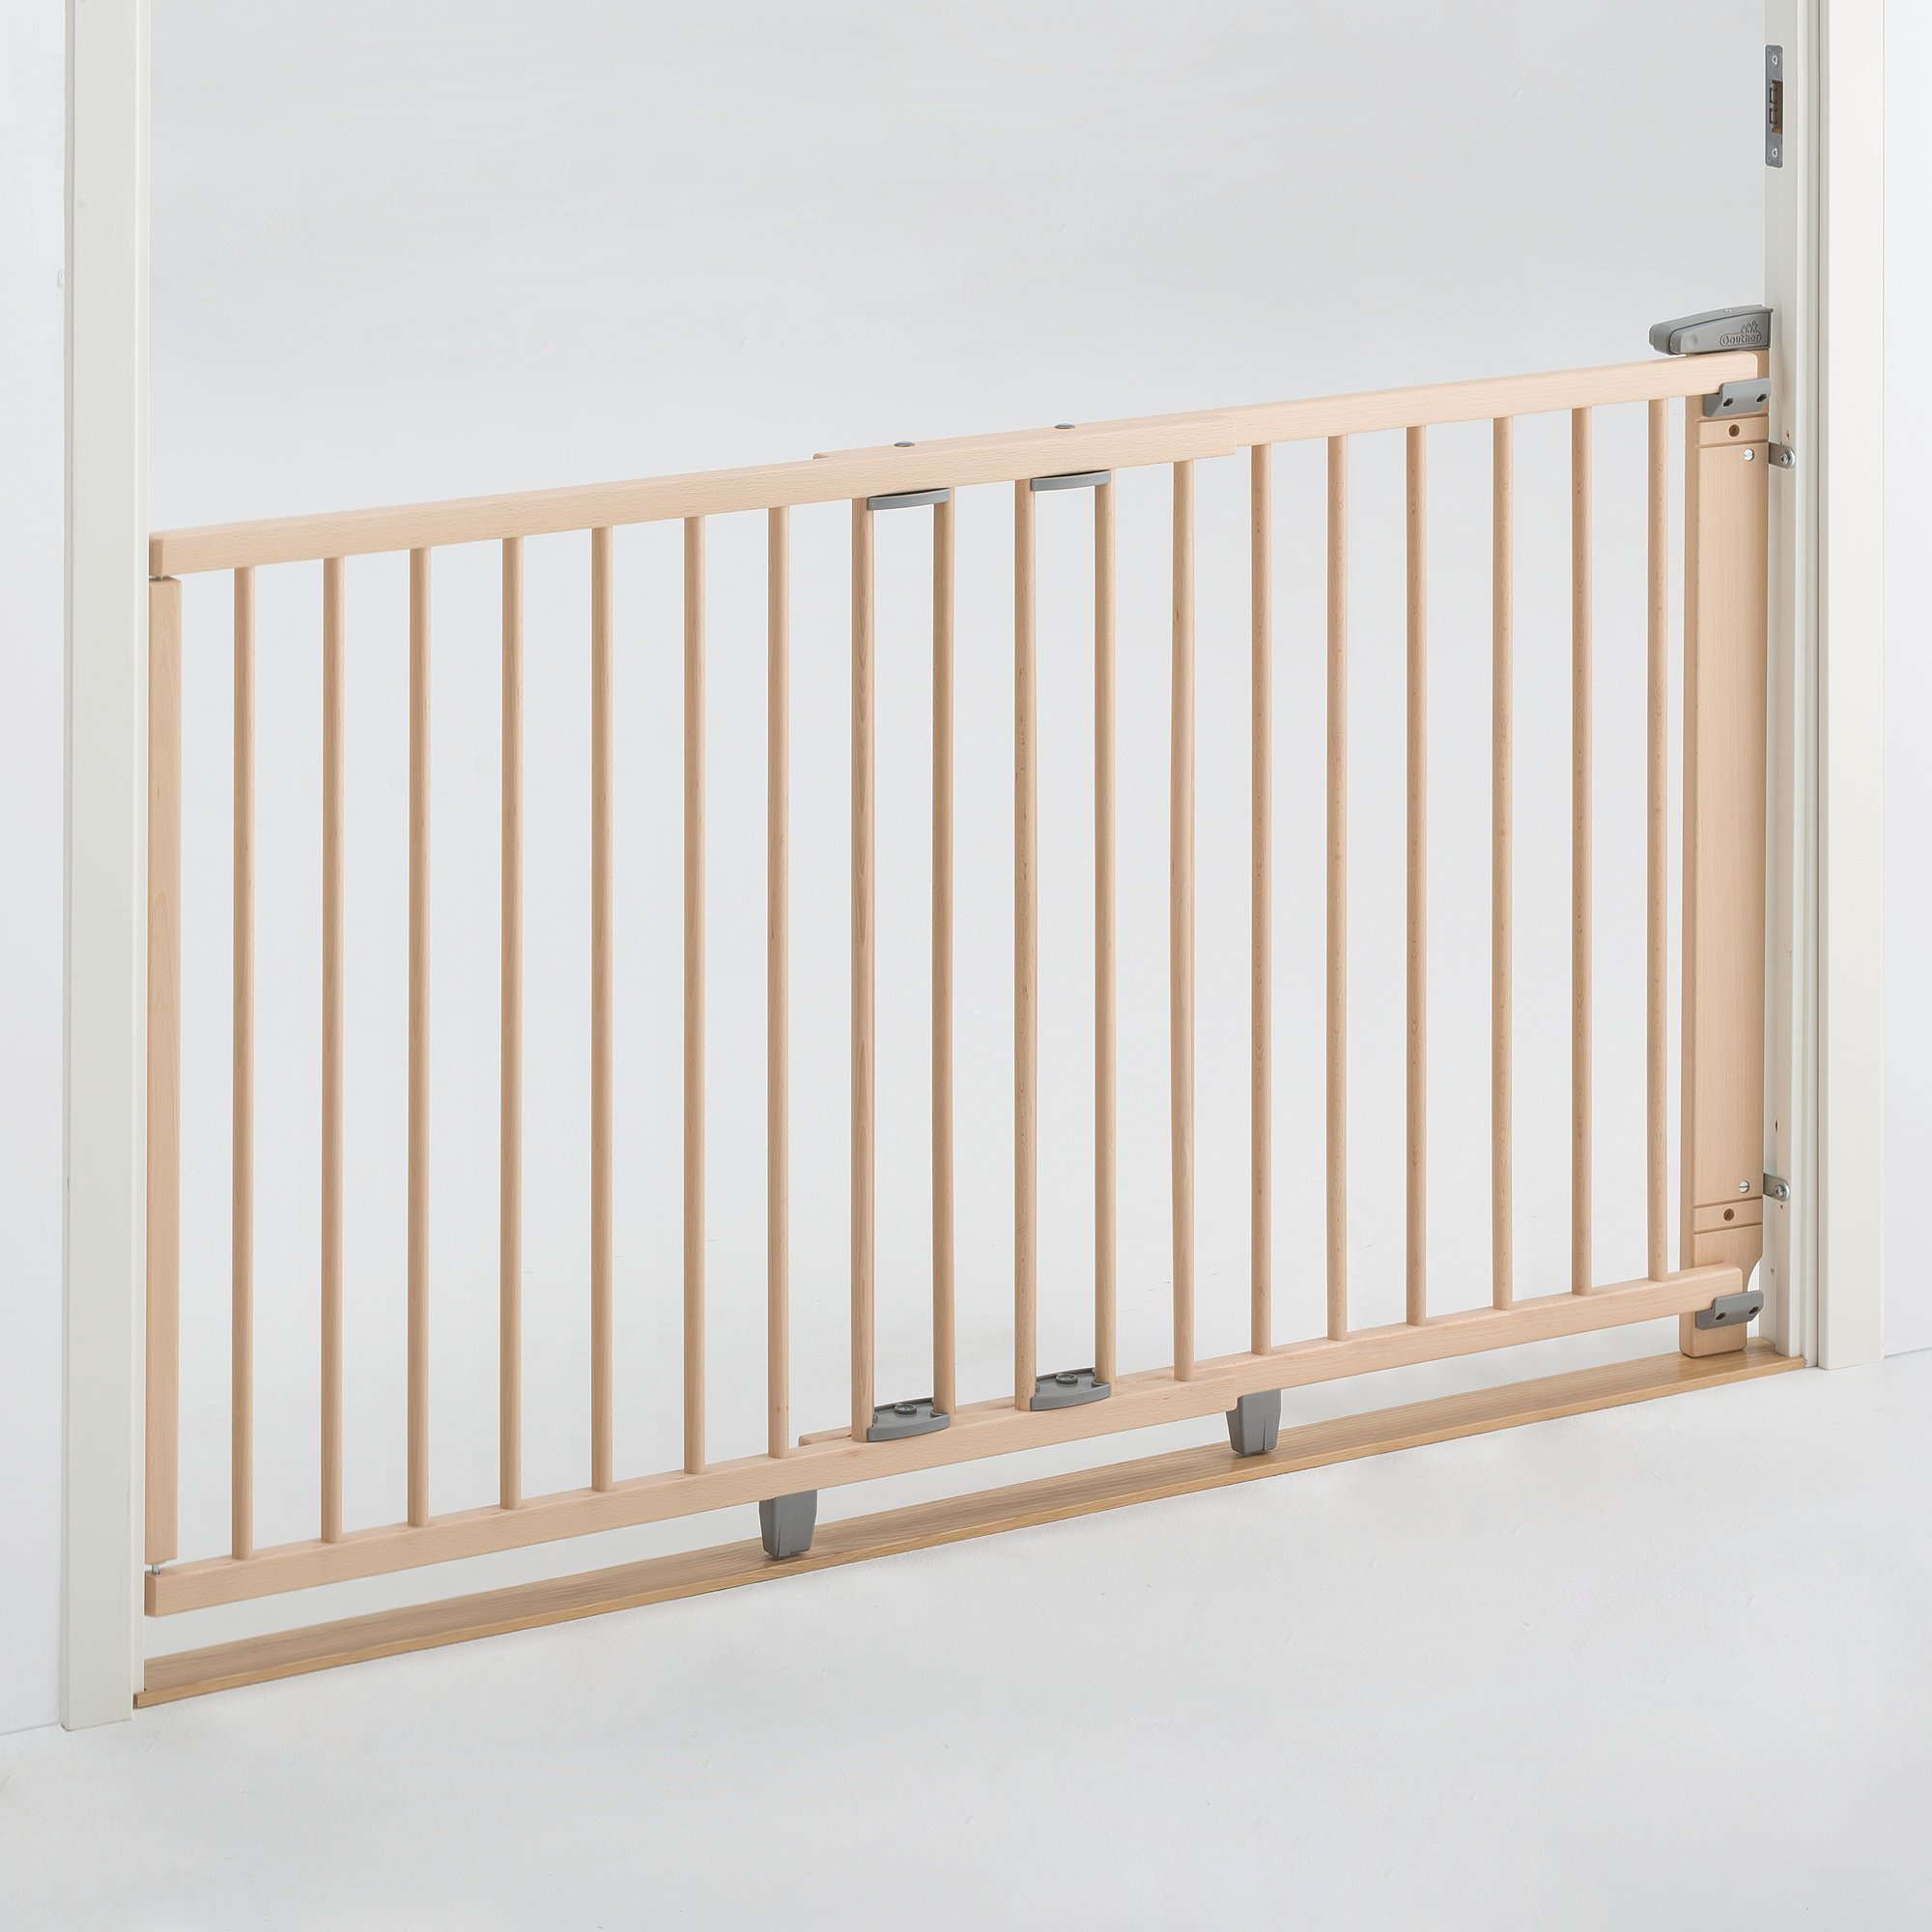 Child safety gate, 935-1330 mm, beech